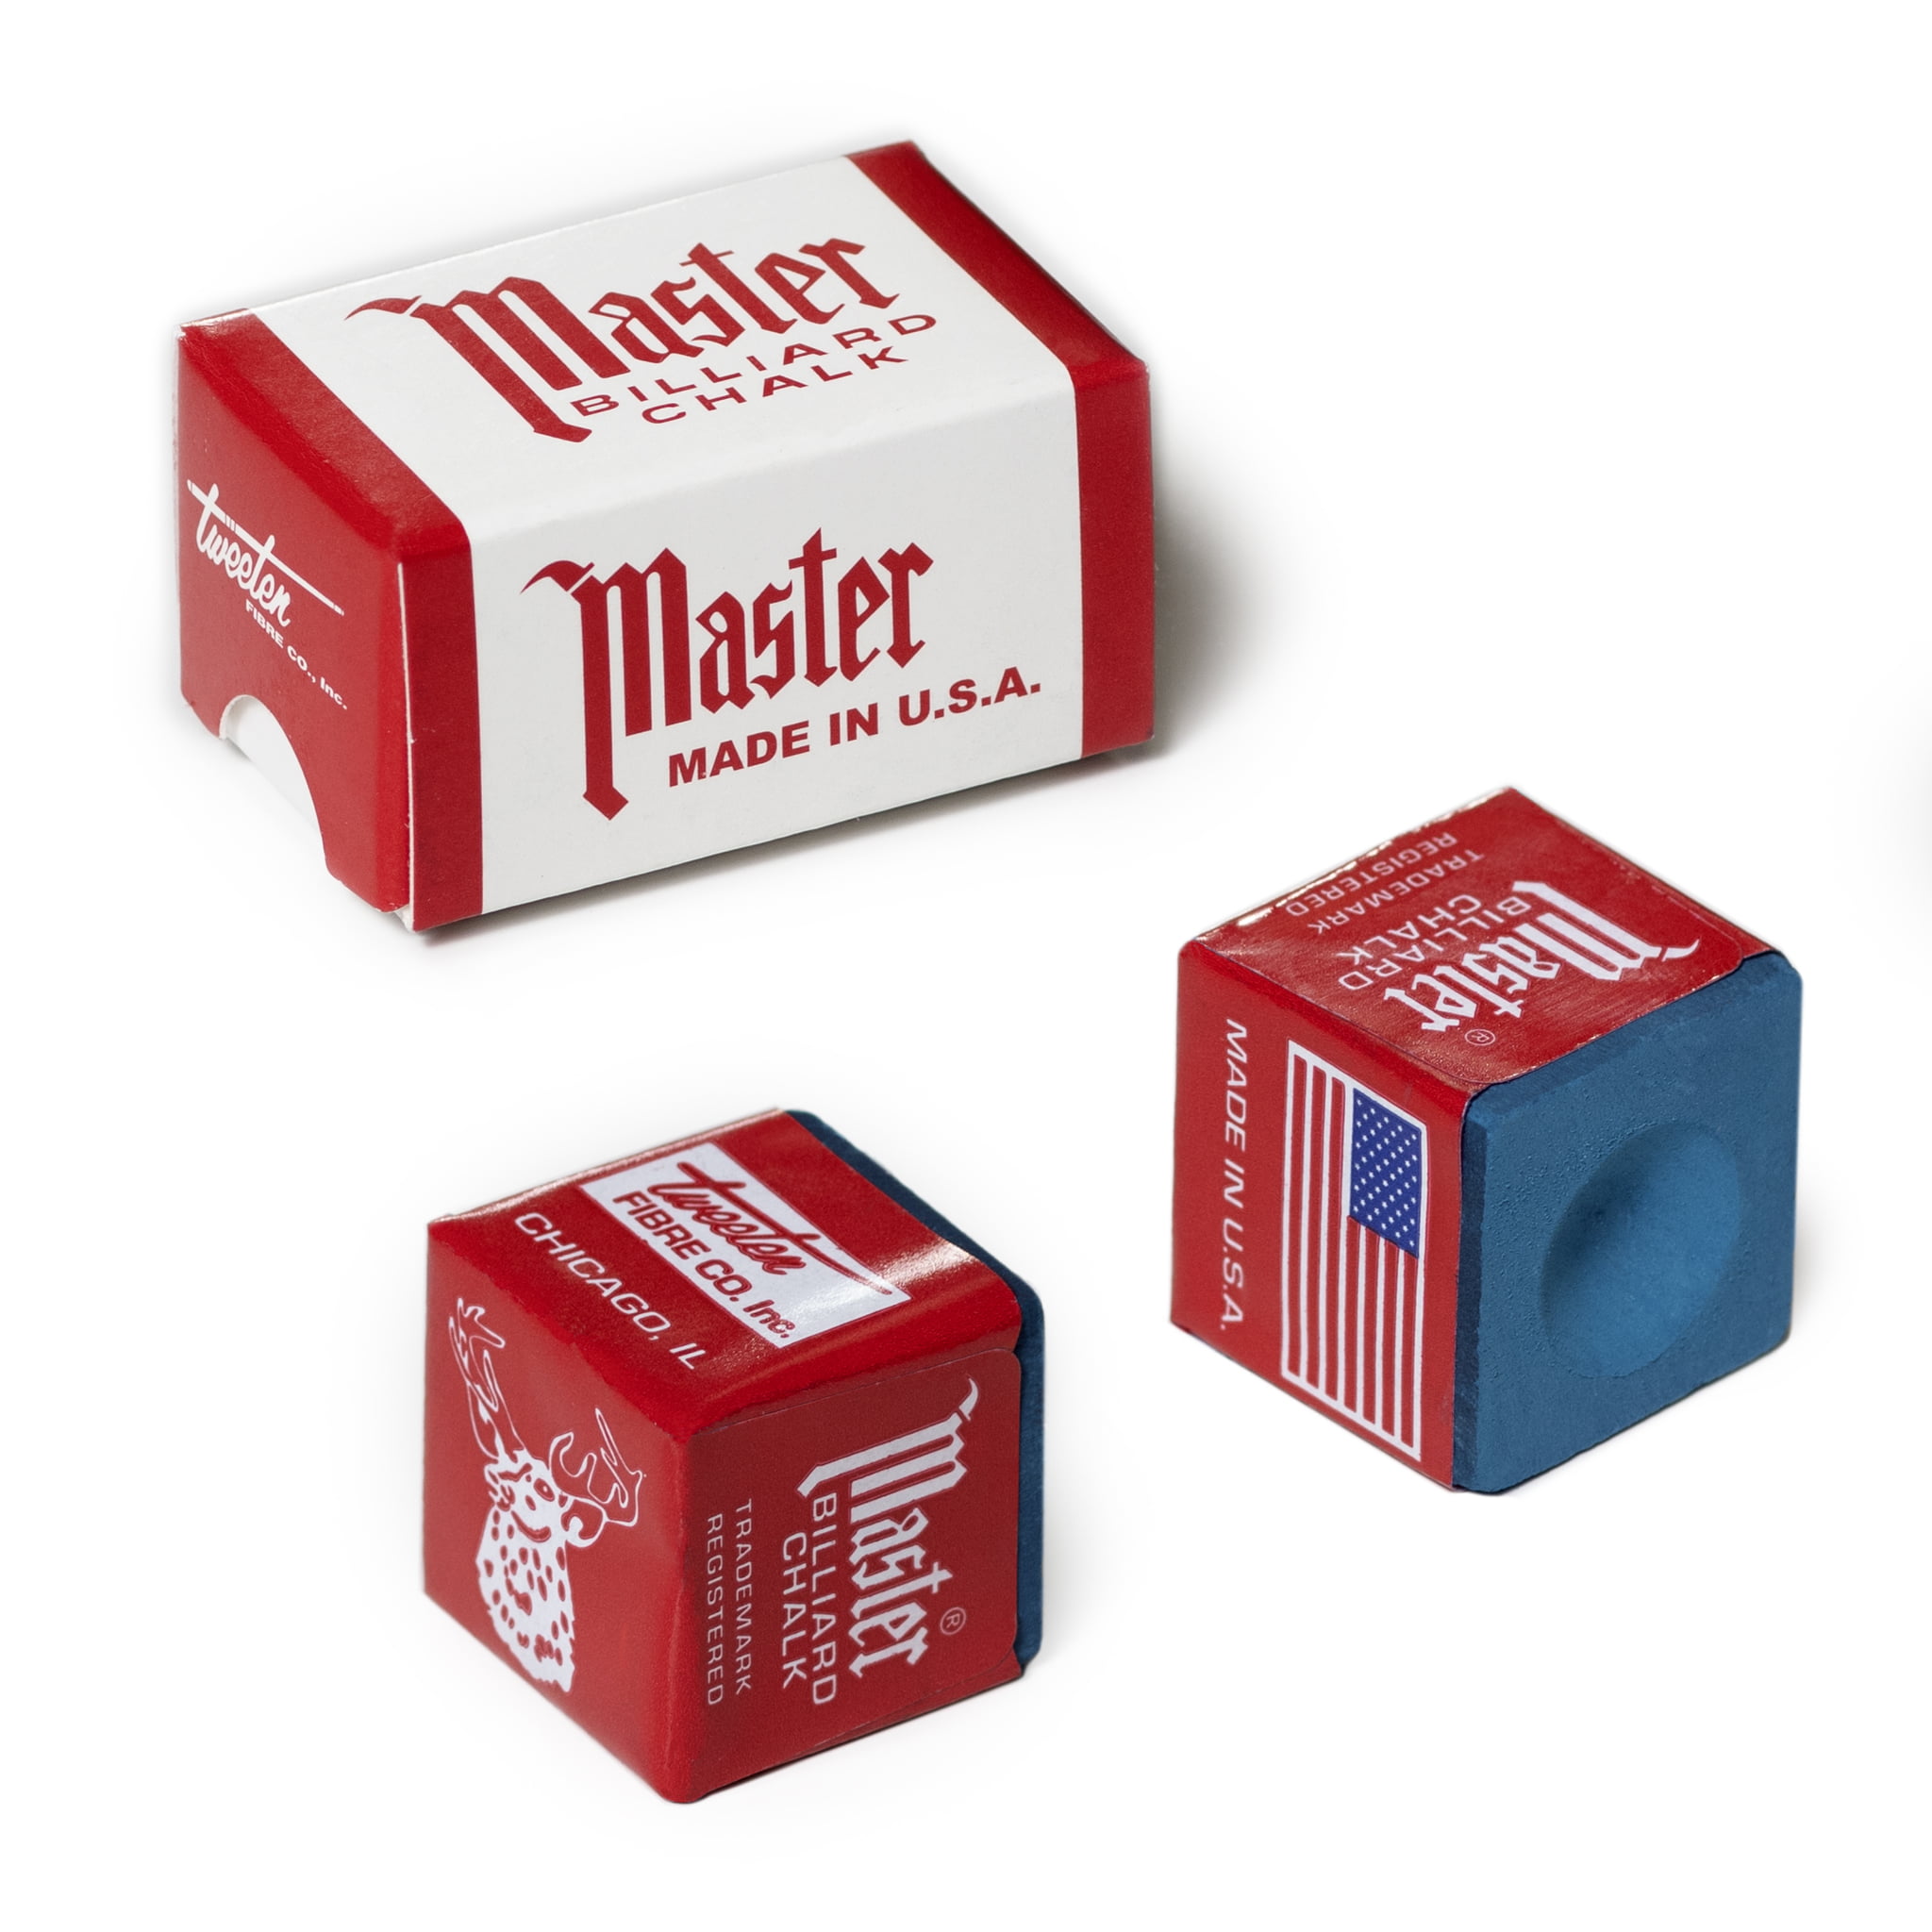 Master Cue Chalk Blue » Buy Online at Union Billiards